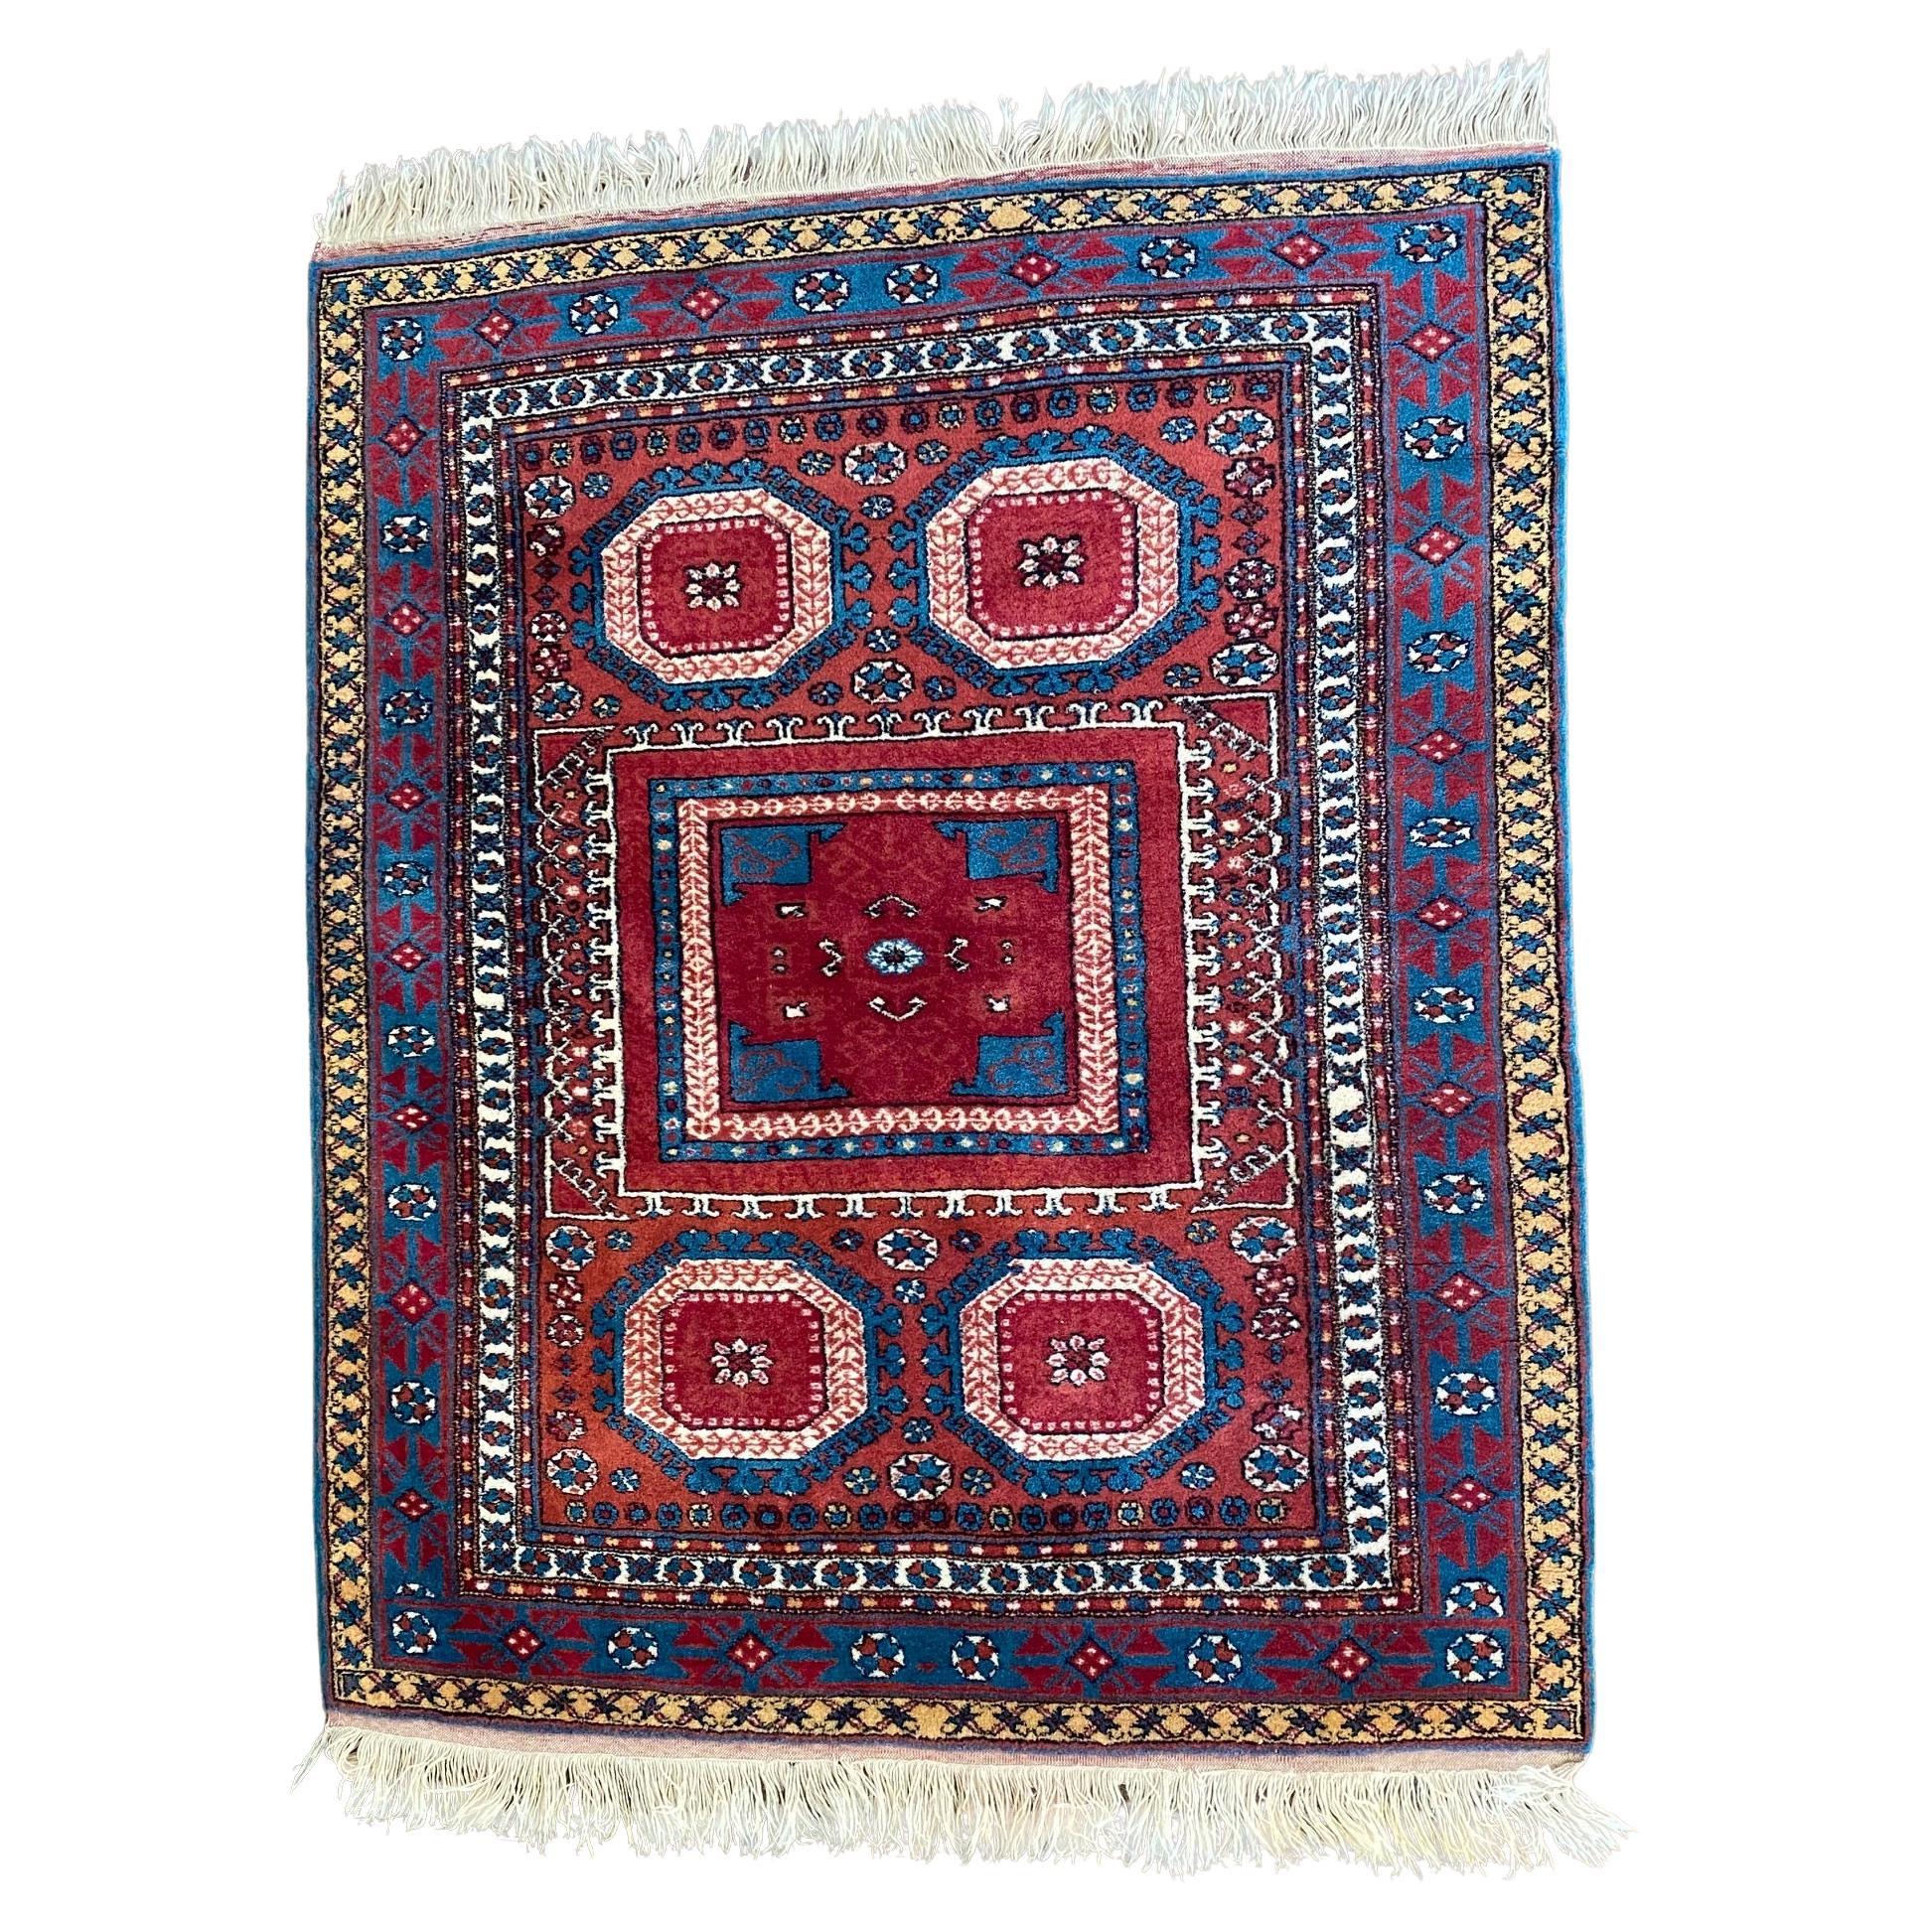 Handsome 5' x 4' Turkish Wool Area Rug